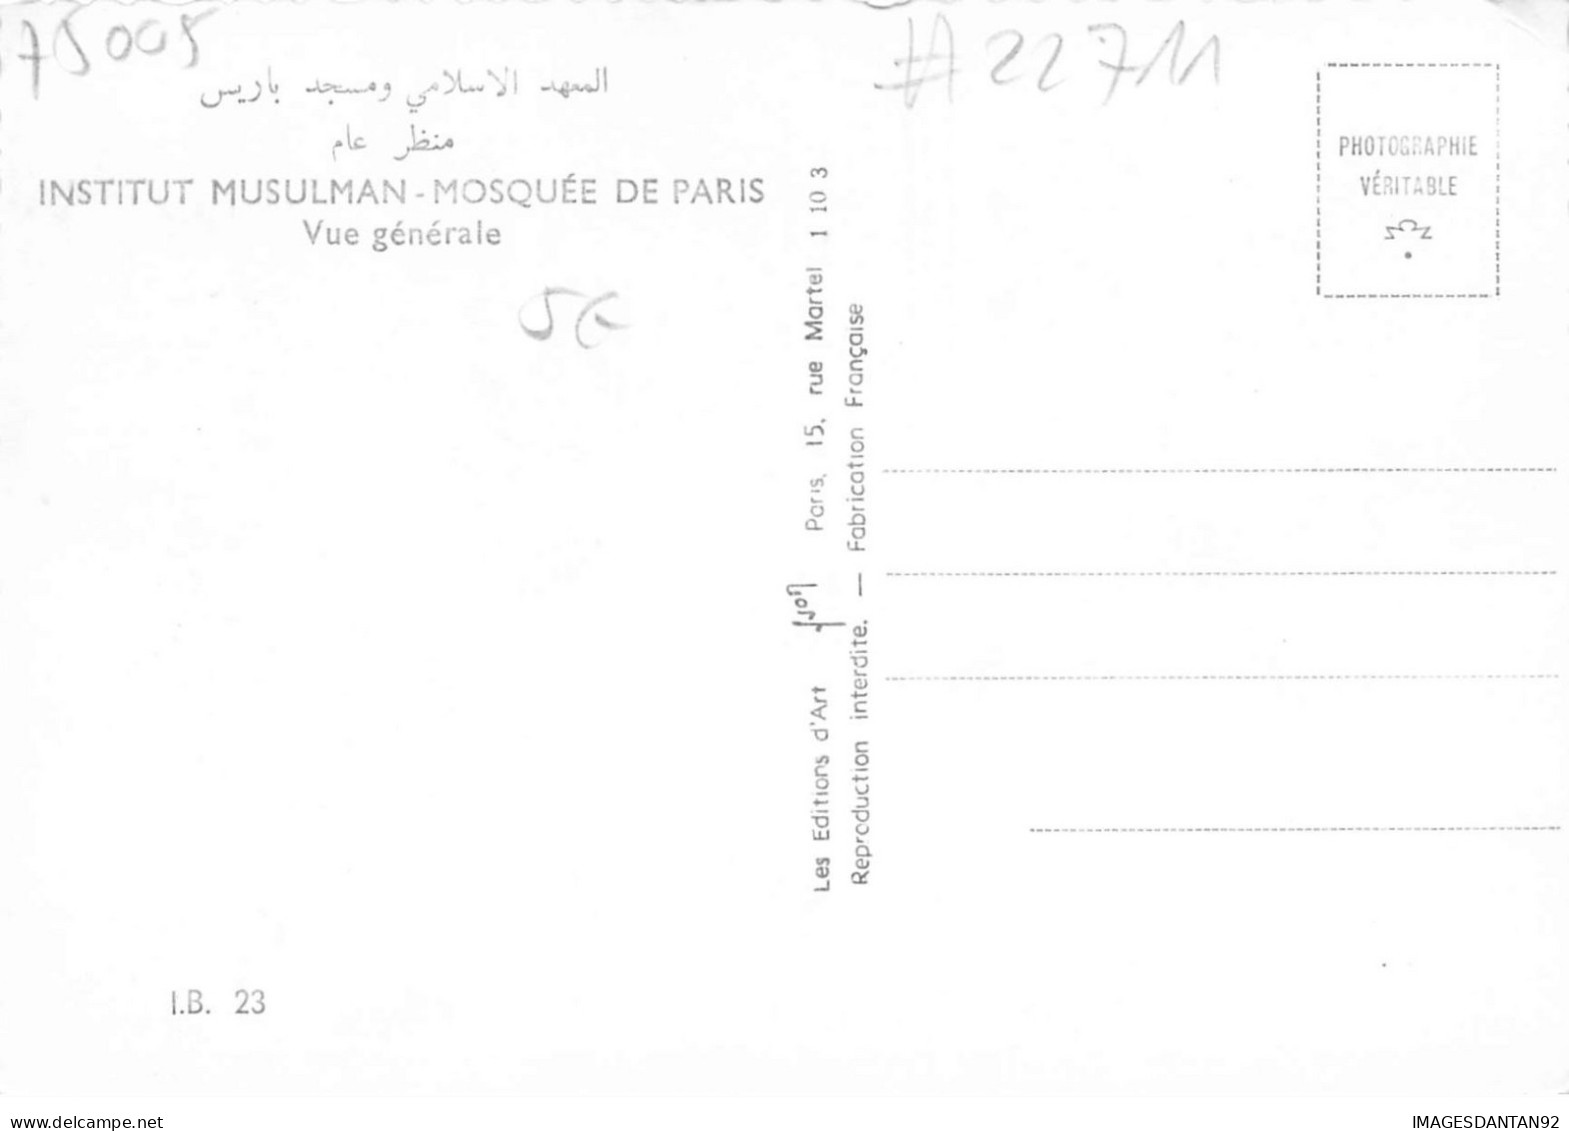 75 PARIS 05 #22711 INSTITUT MUSULMAN GRANDE MOSQUEE VUE GENERALE - District 05